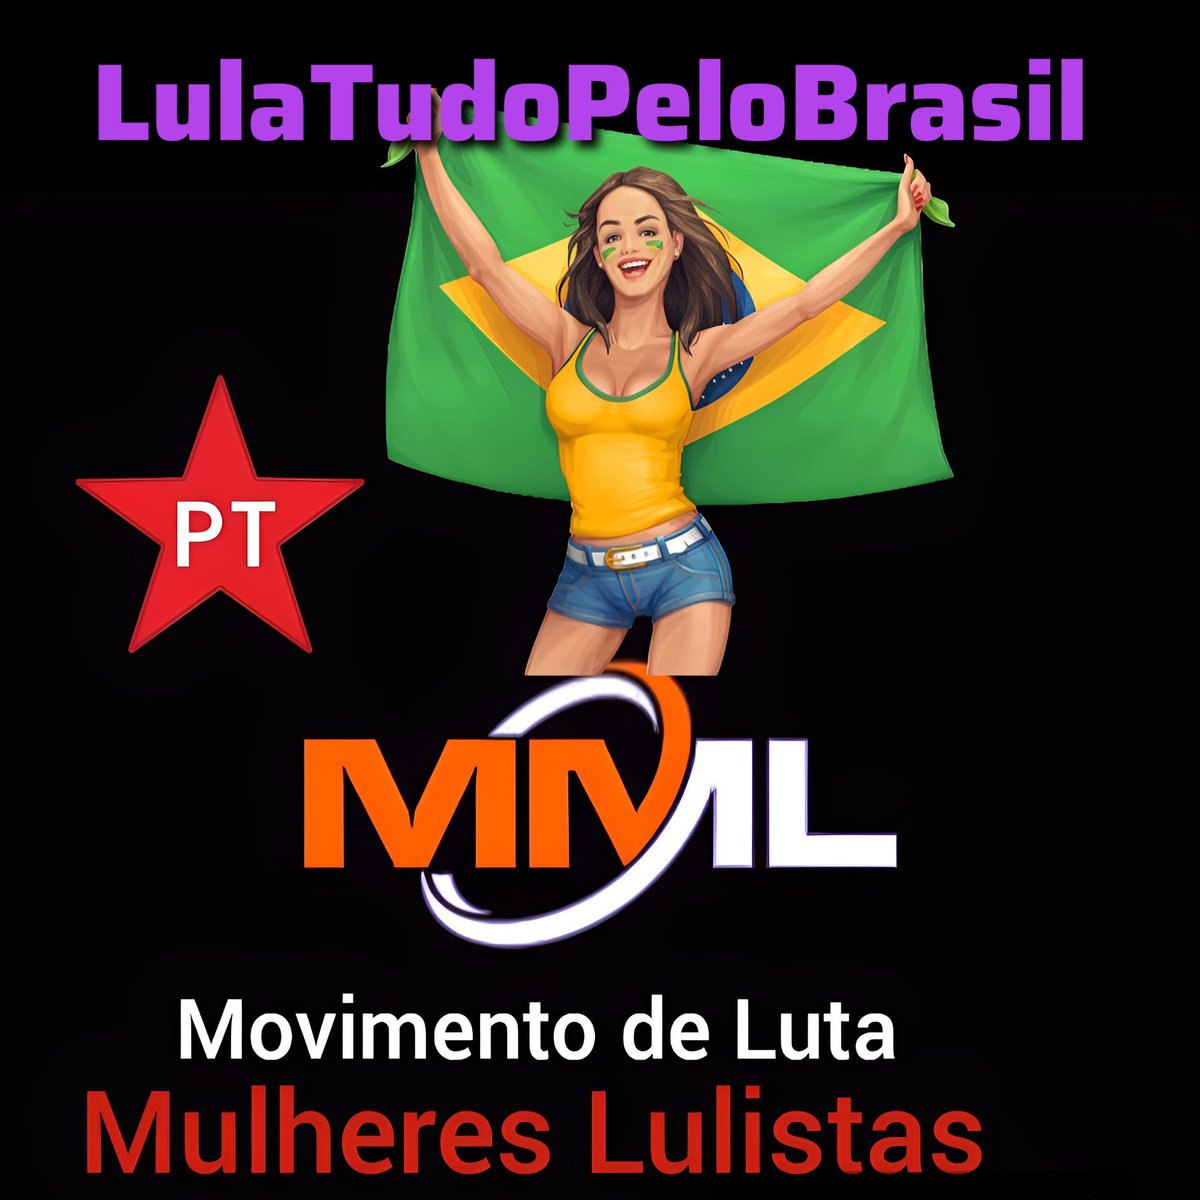 Obrigada, Presidente Luís Inácio Lula da Silva! LULA SALVA VIDAS @LulaOficial @ptbrasil @V13lula #LulaTudoPeloBrasil #MML